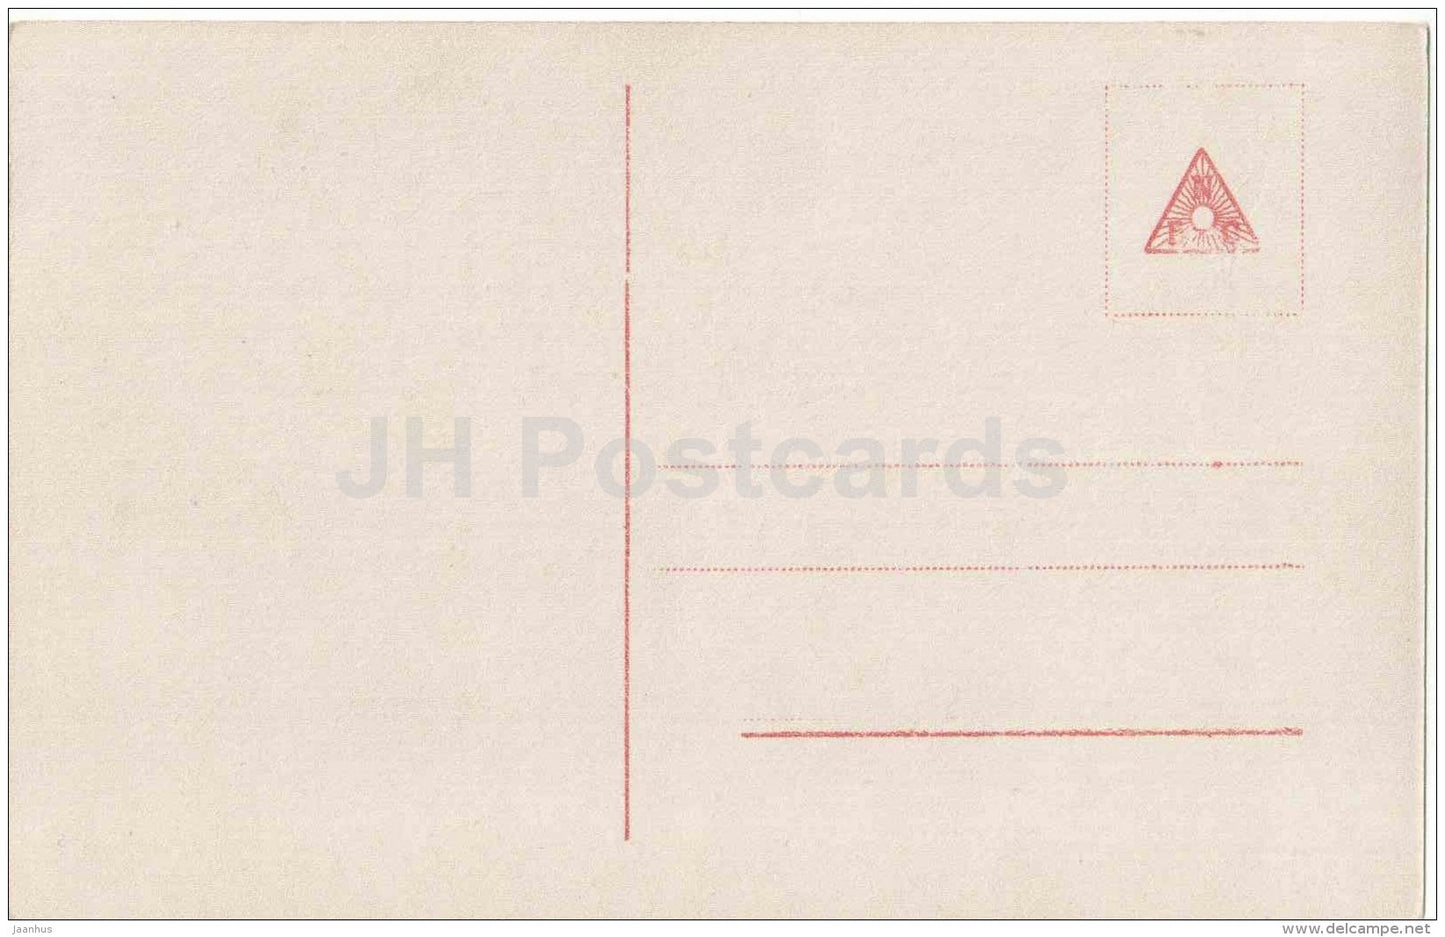 Aruth Wartan - movie actor - Ross verlag - 227/1 - old postcard - unused - JH Postcards